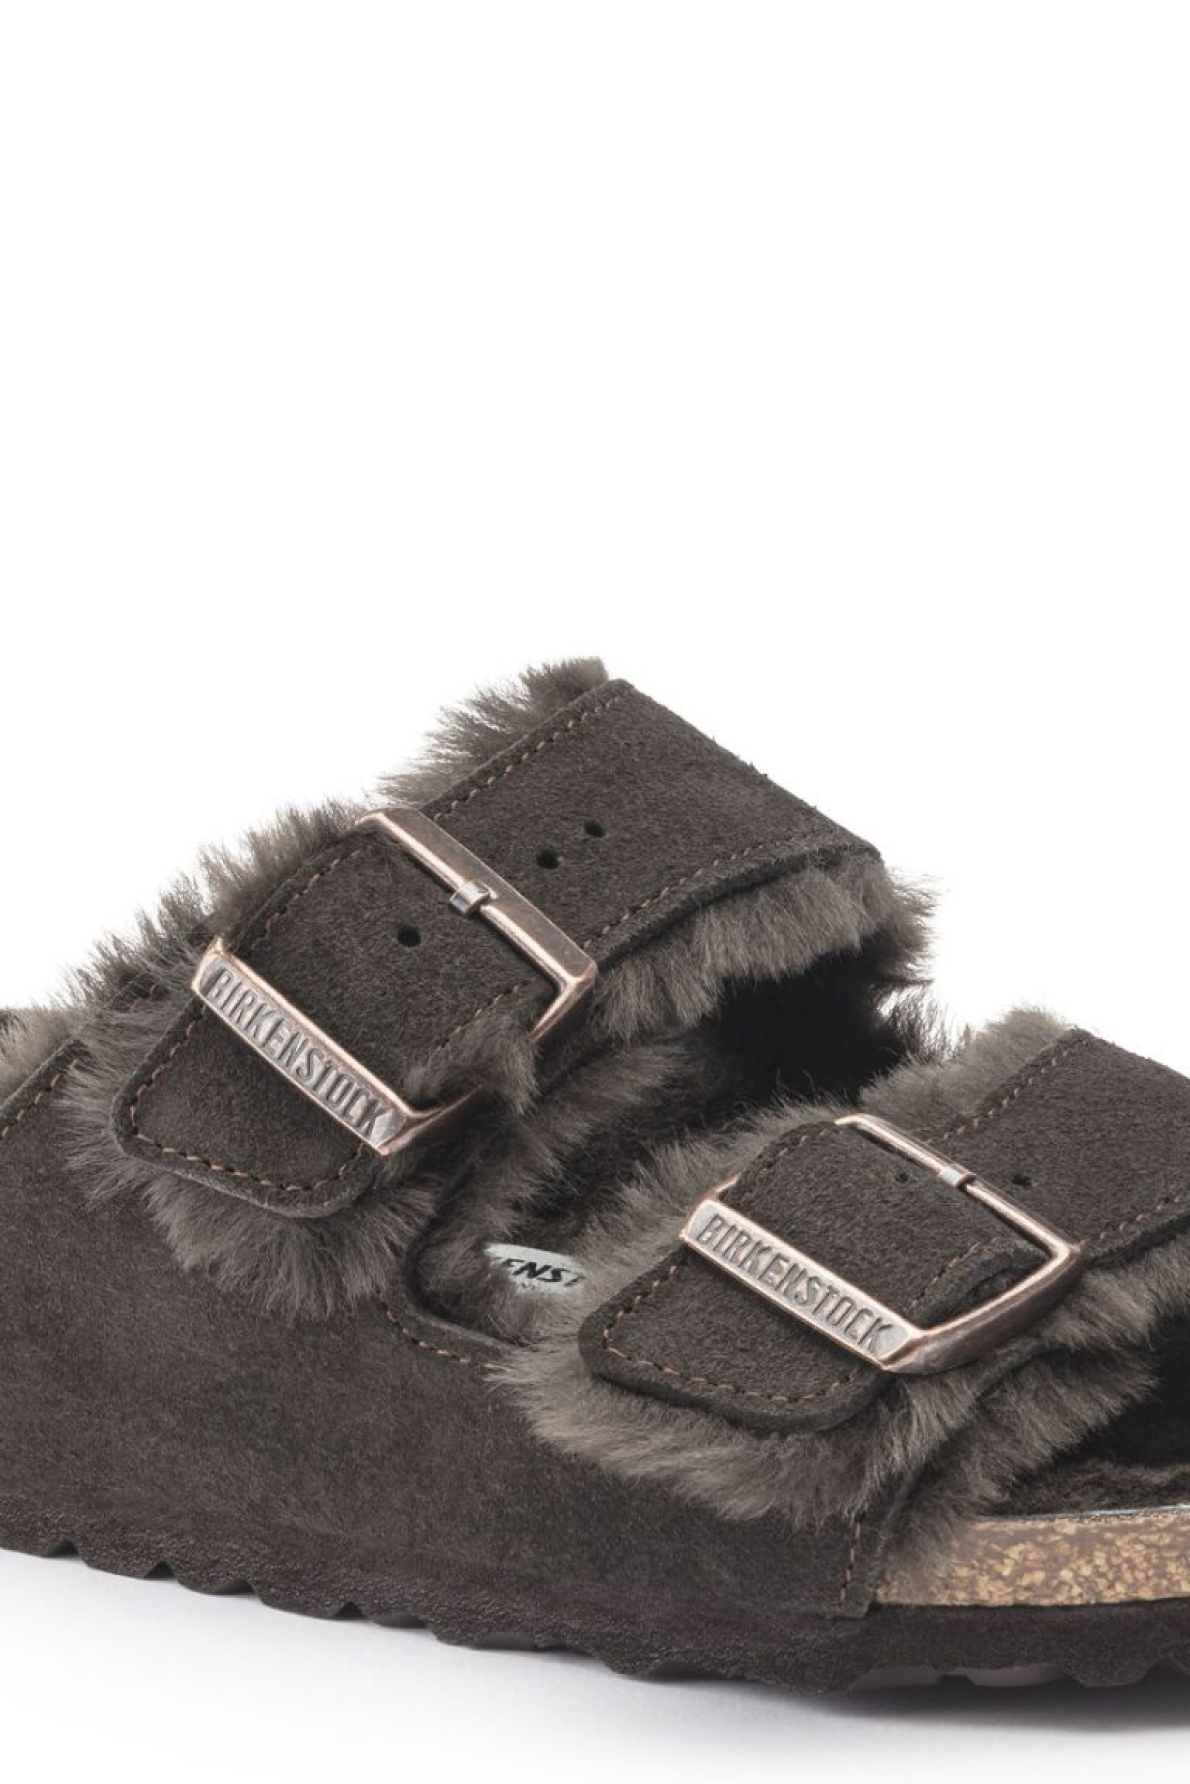 Birkenstock Women's Arizona Shearling Suede Leather Sandals Mocha - Close Up Buckle